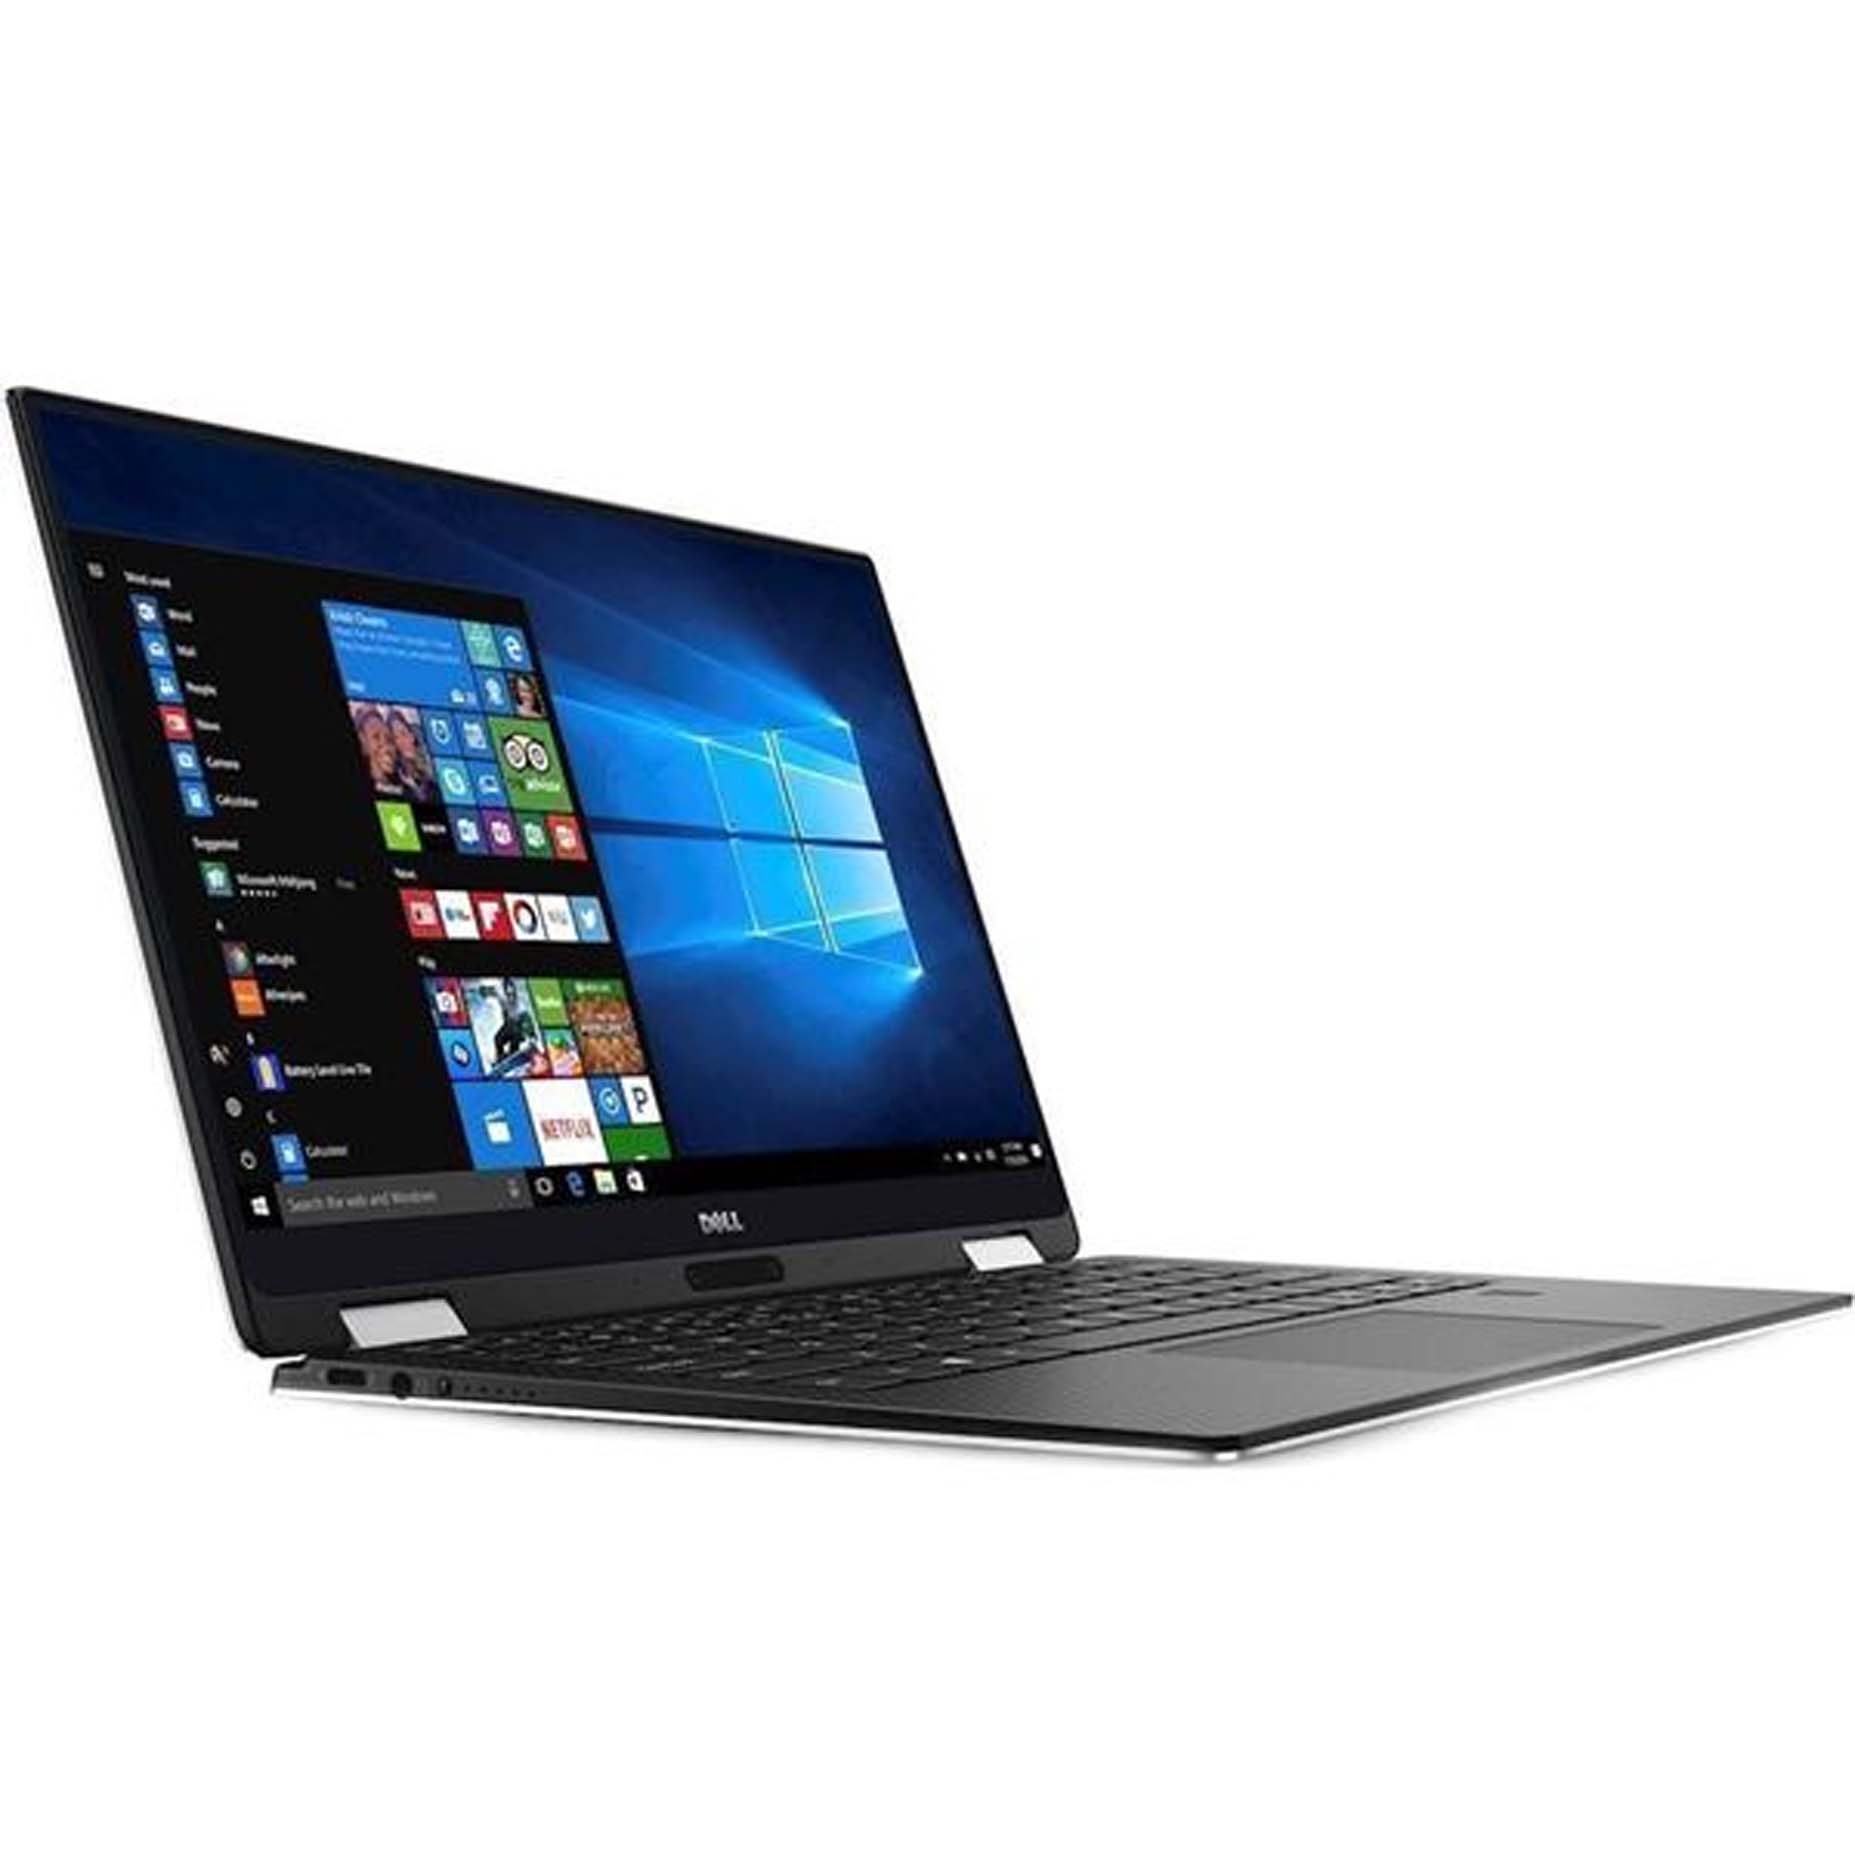 Harga Jual Laptop Dell Xps 13 2 In 1 9365 Intel Core I7 7y75